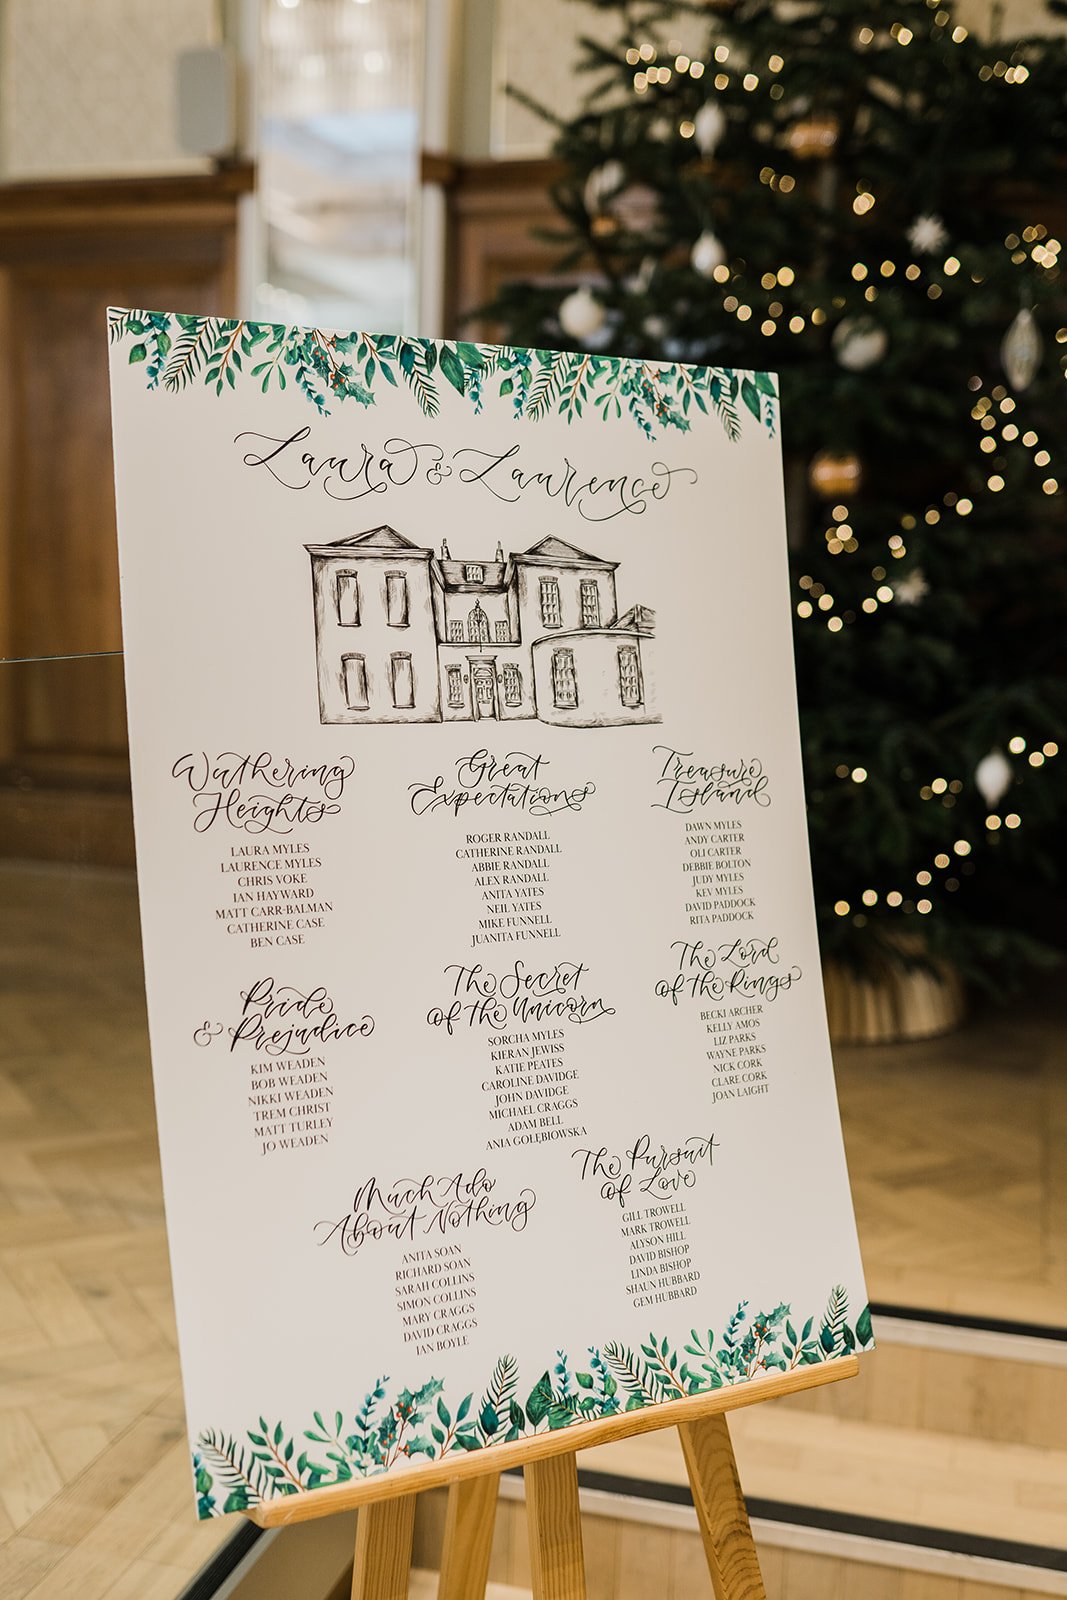 Pelham House wedding stationery - calligraphy book themed table plan with illustration of pelham house.jpg